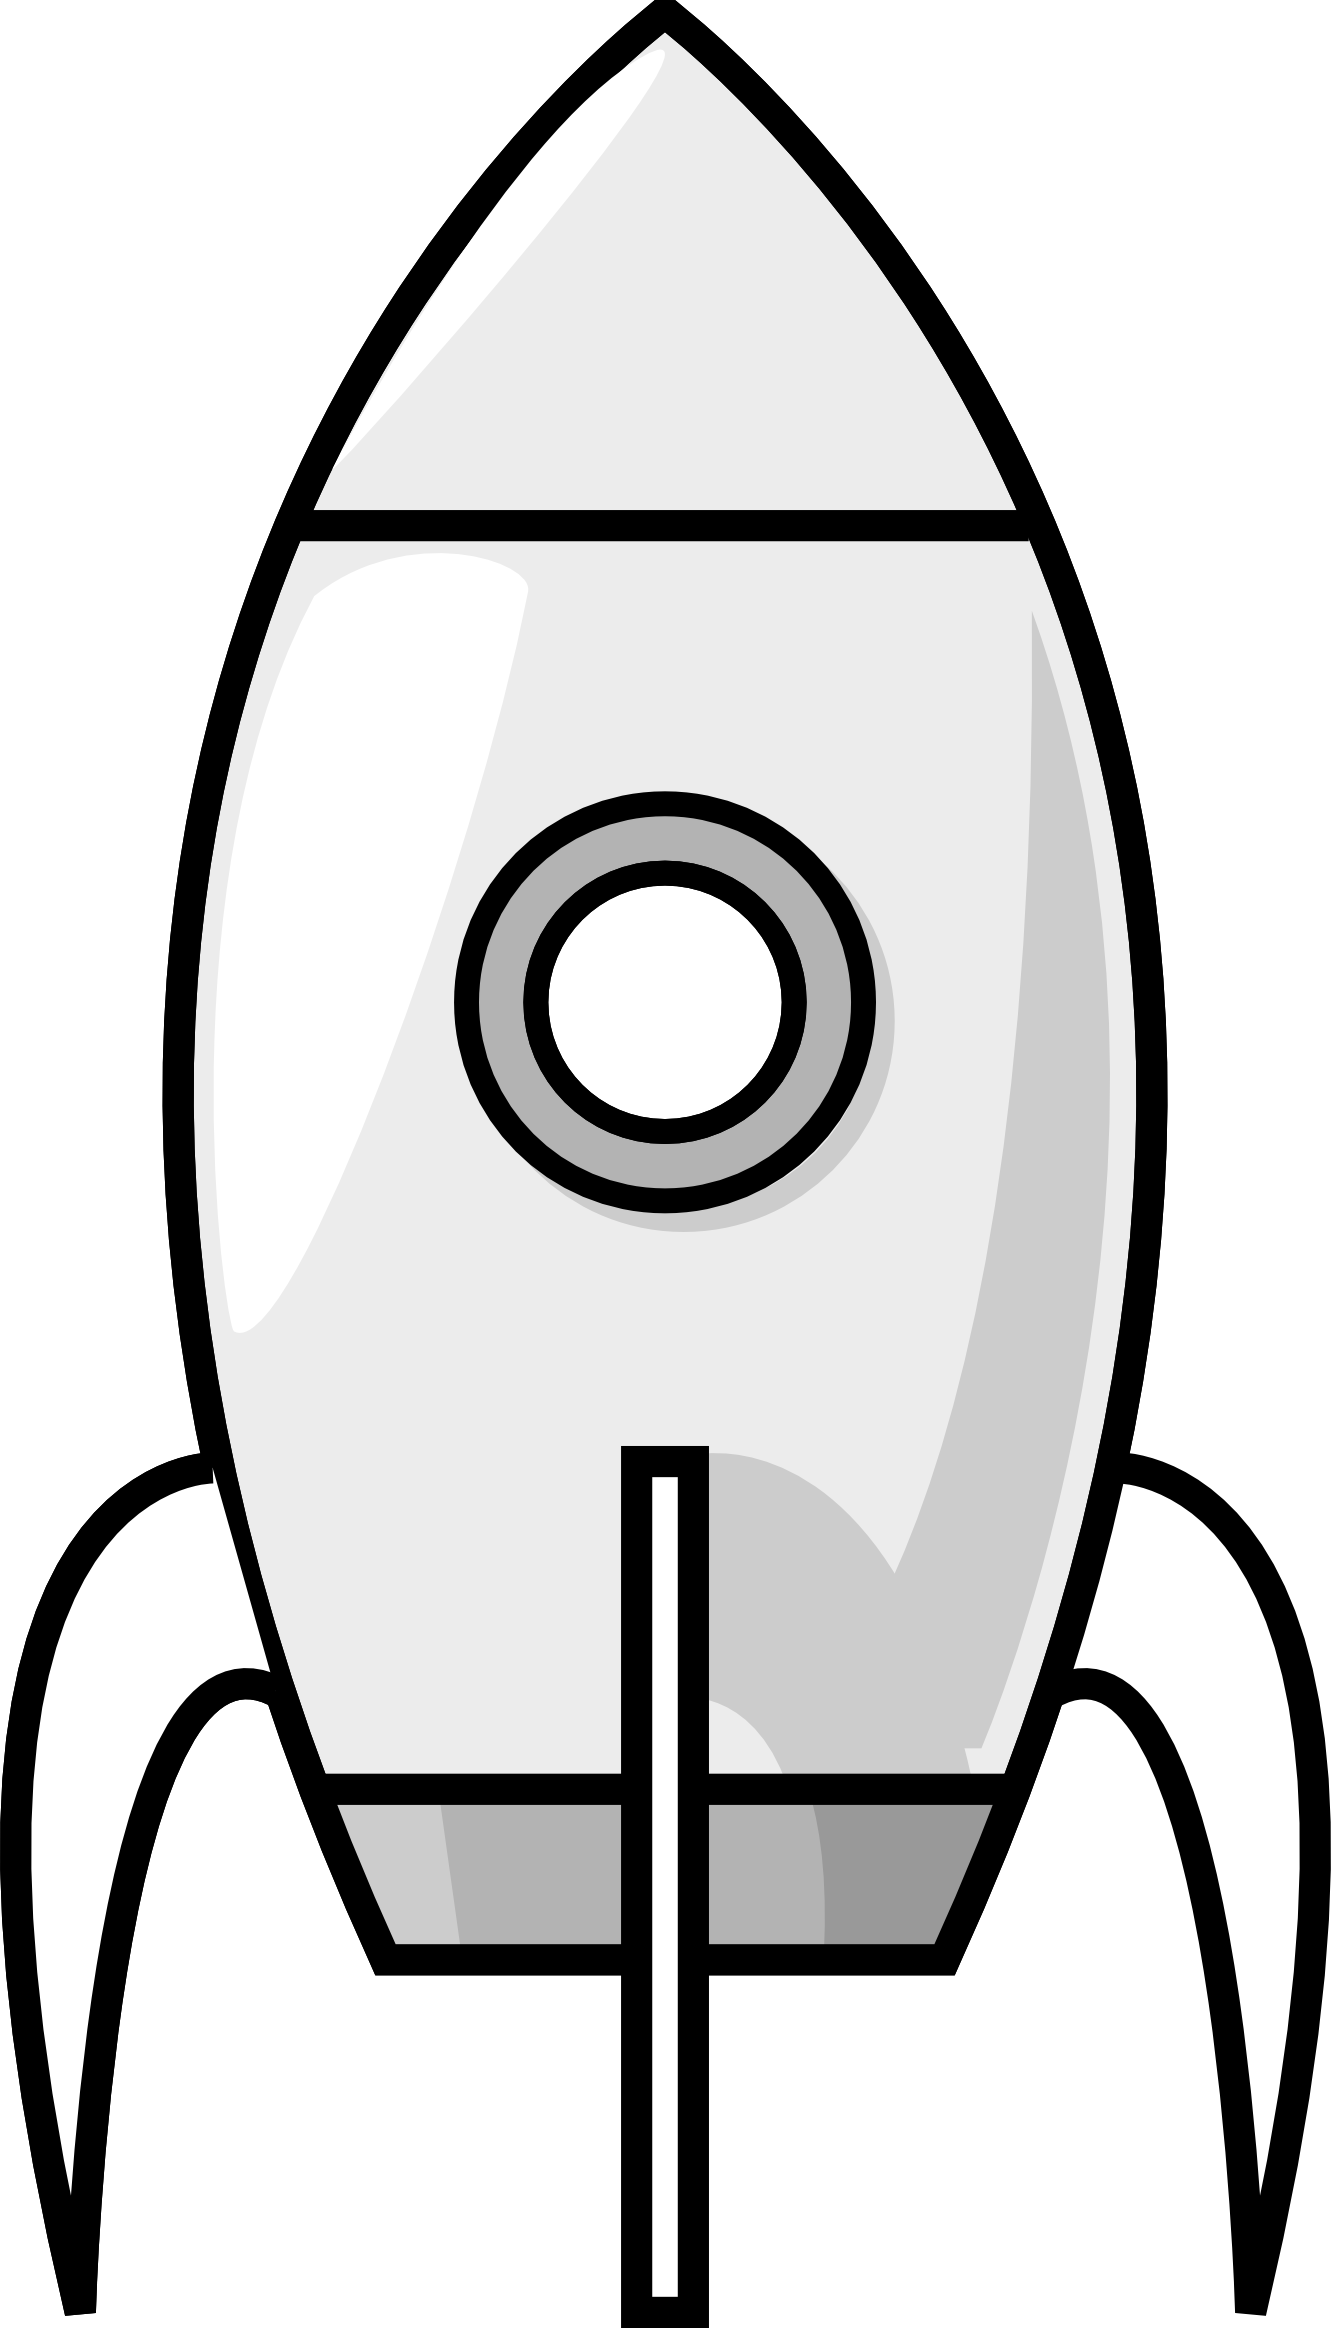 Pix For > Rocket Ship Cartoon Black And White